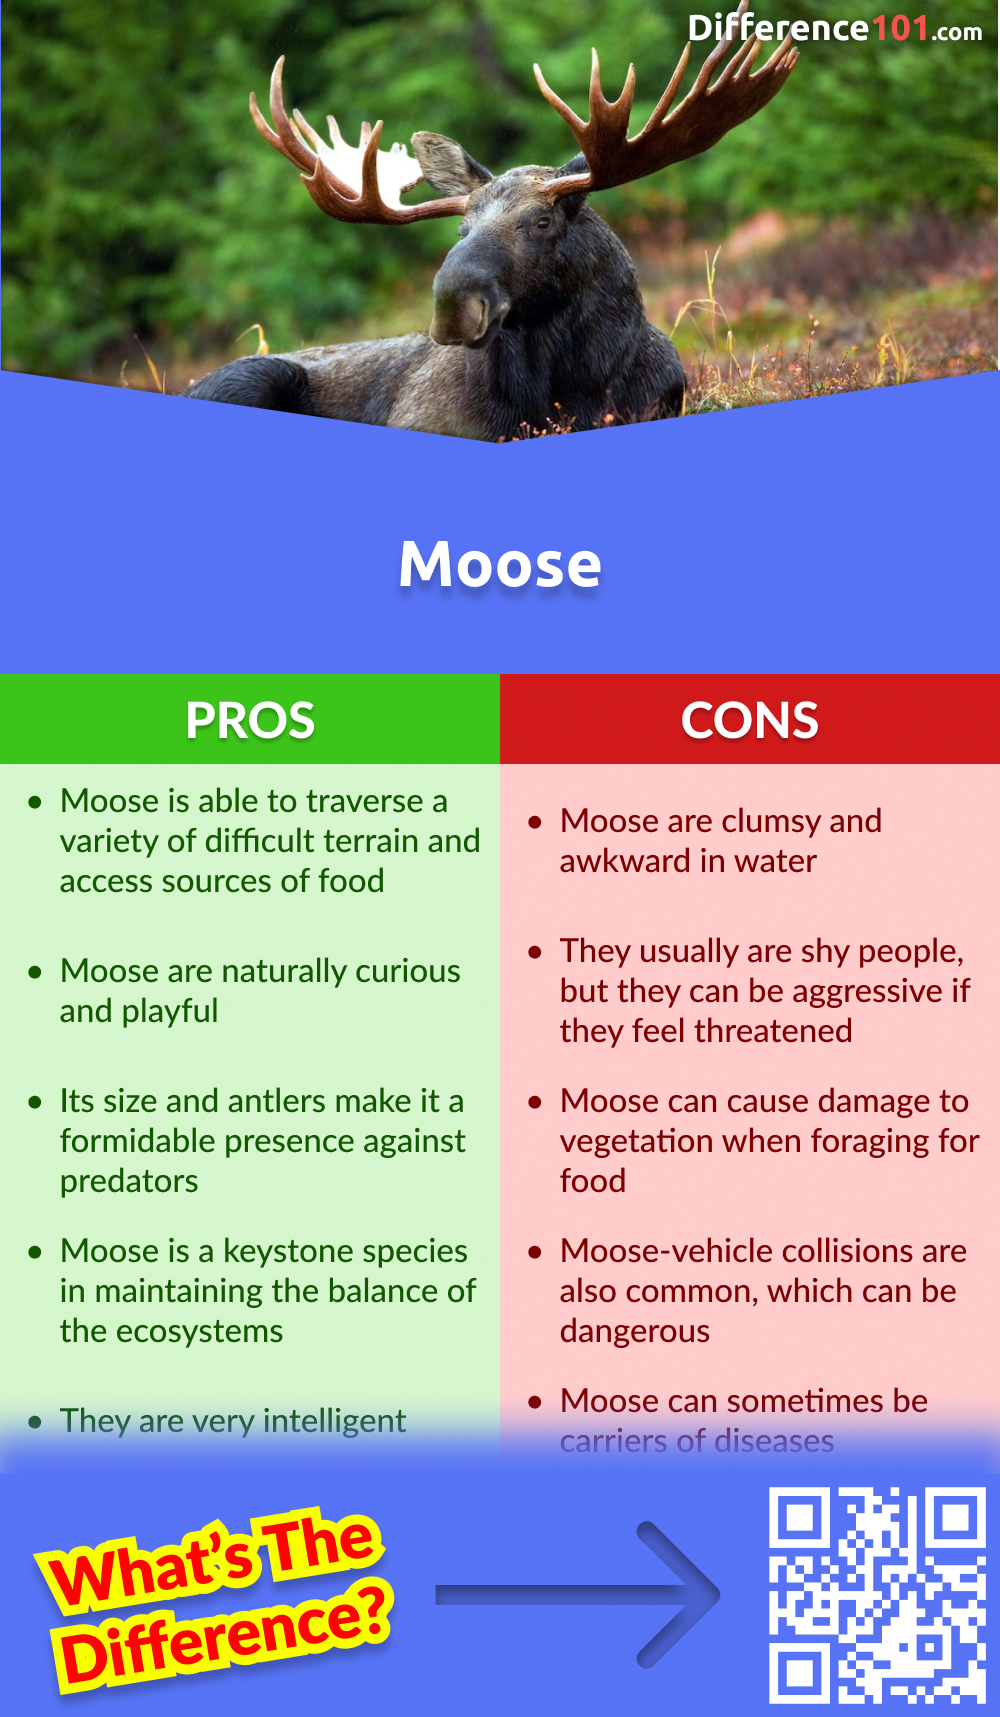 Moose Pros & Cons